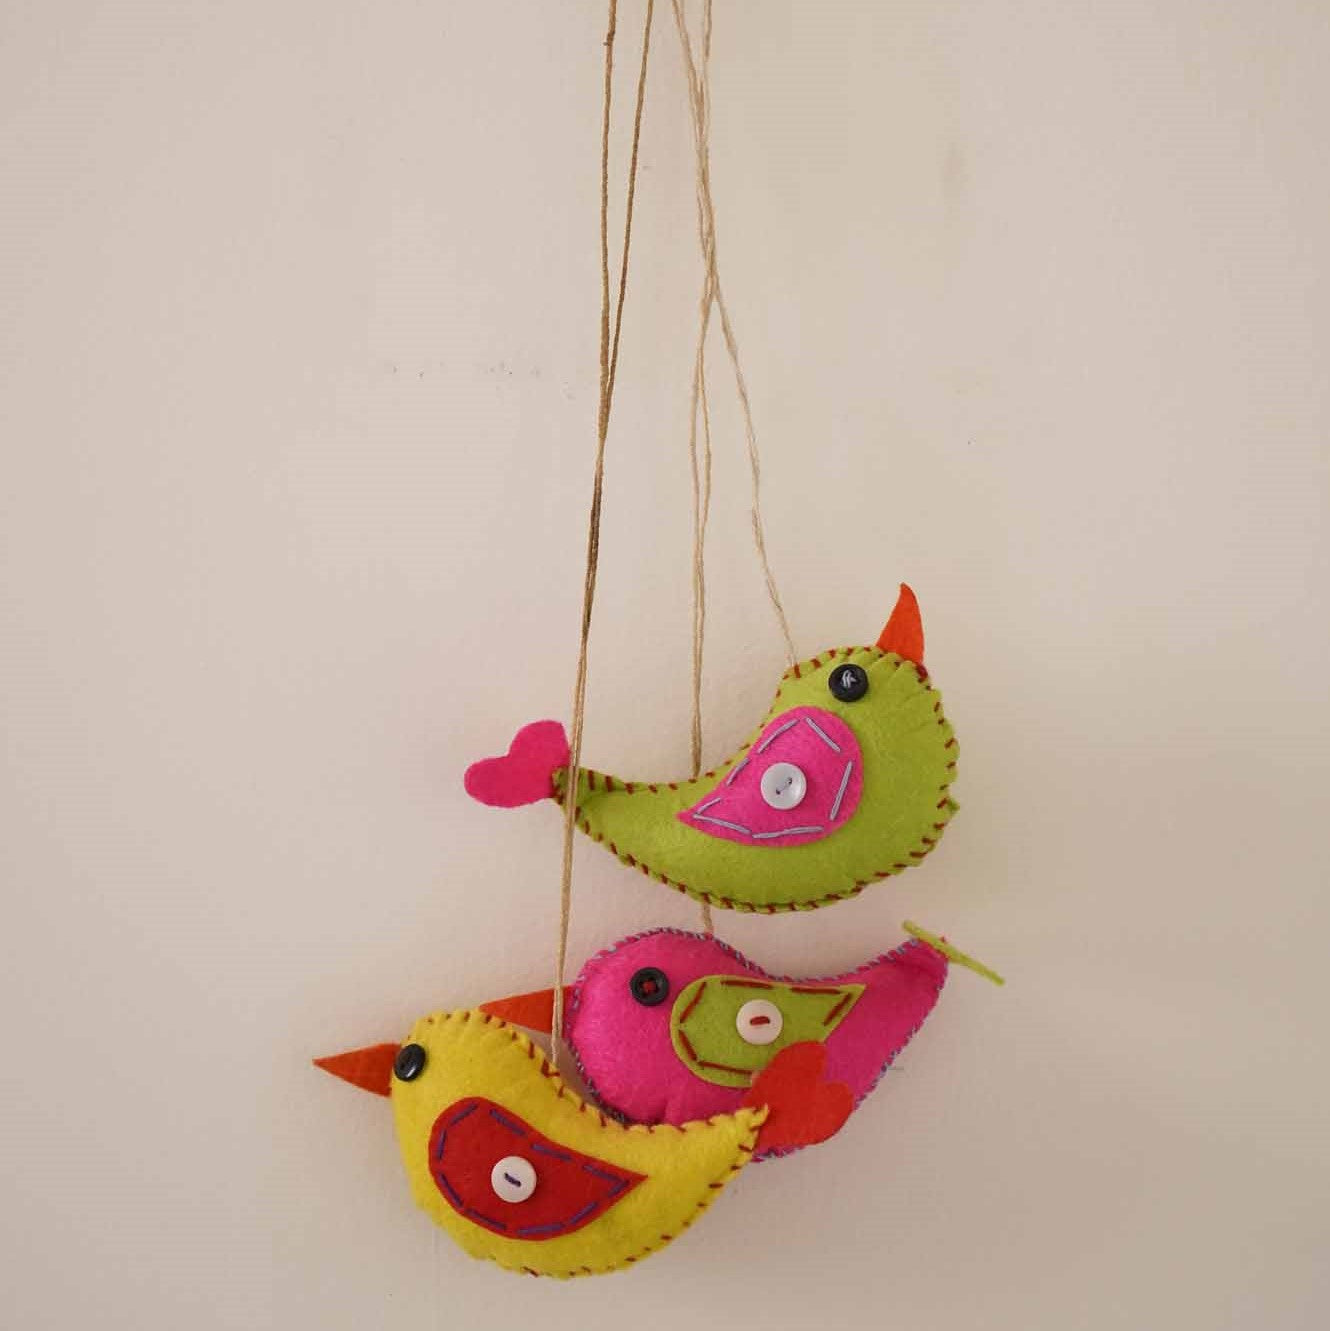 Assorted Namda Hanging Birds - Set of 3